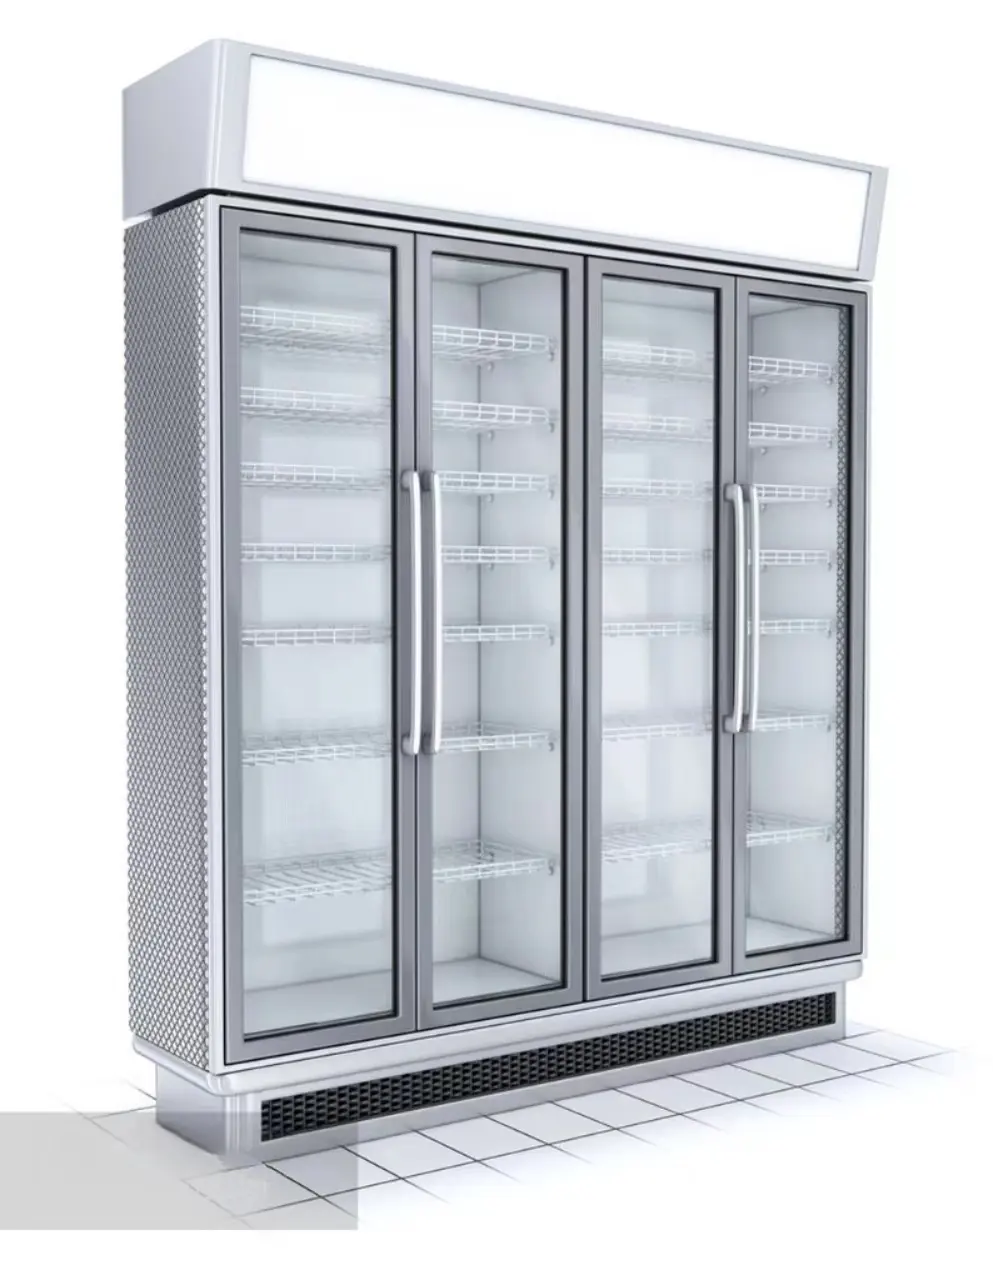 Freezer es krim bekas pintu kaca